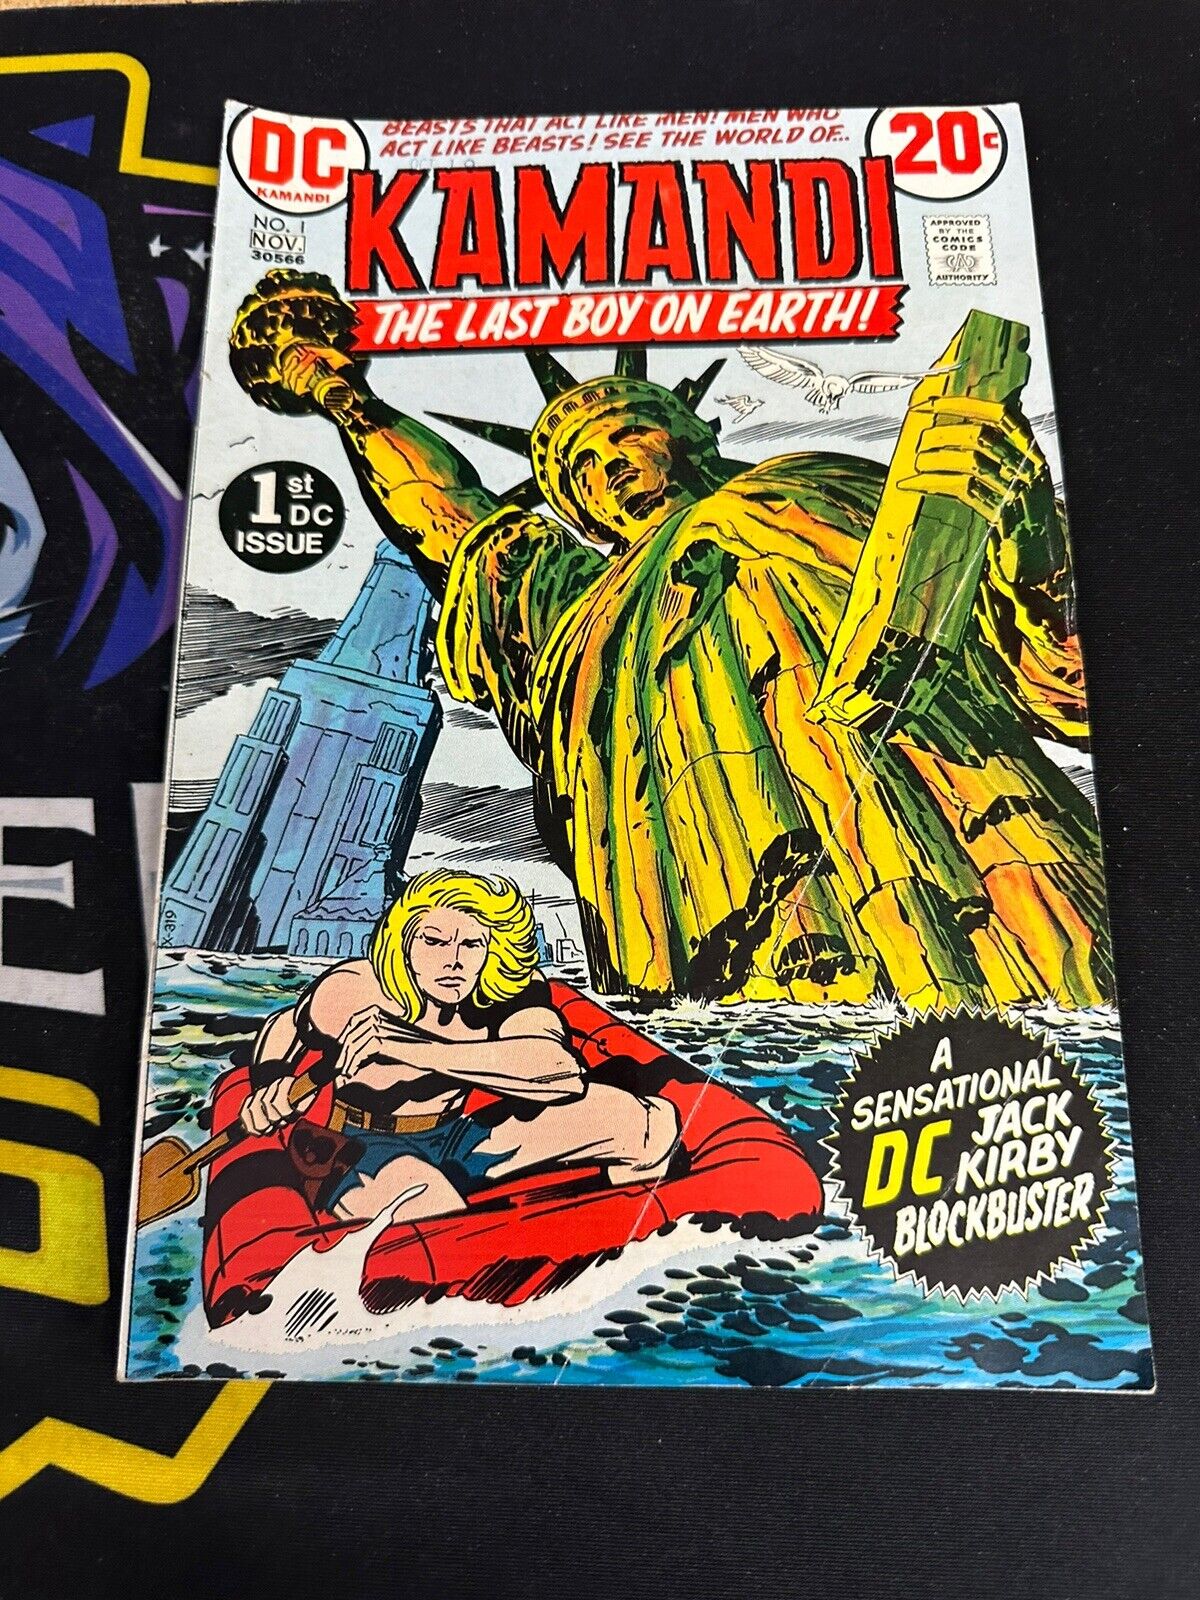 Kamandi # 1 - Origin & 1st appearance, Jack Kirby cover & art